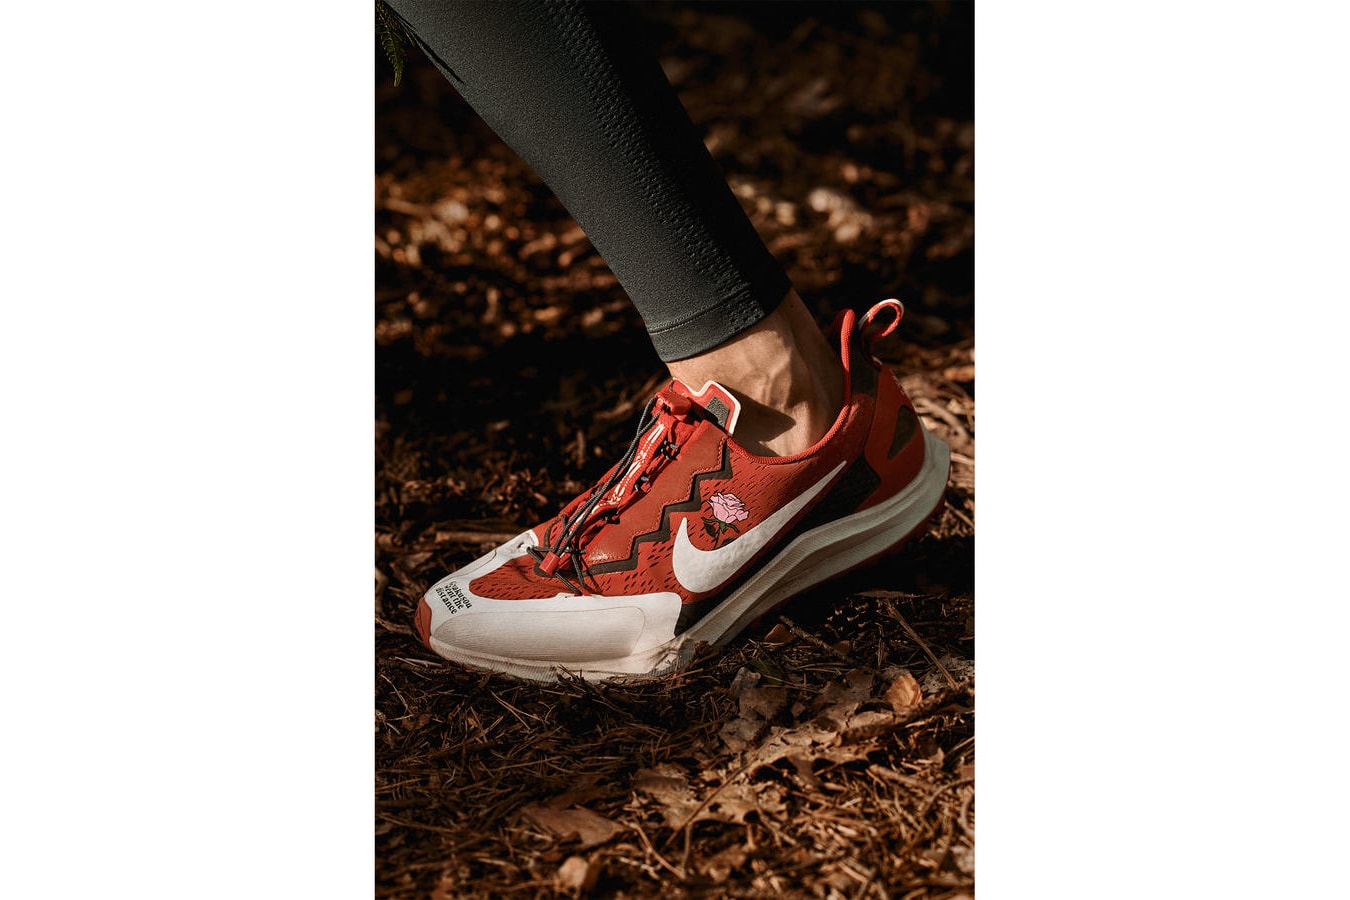 Nike GYAKUSOU Fall 2019 Collection Jun Takahashi lookbooks running trails gear undercover